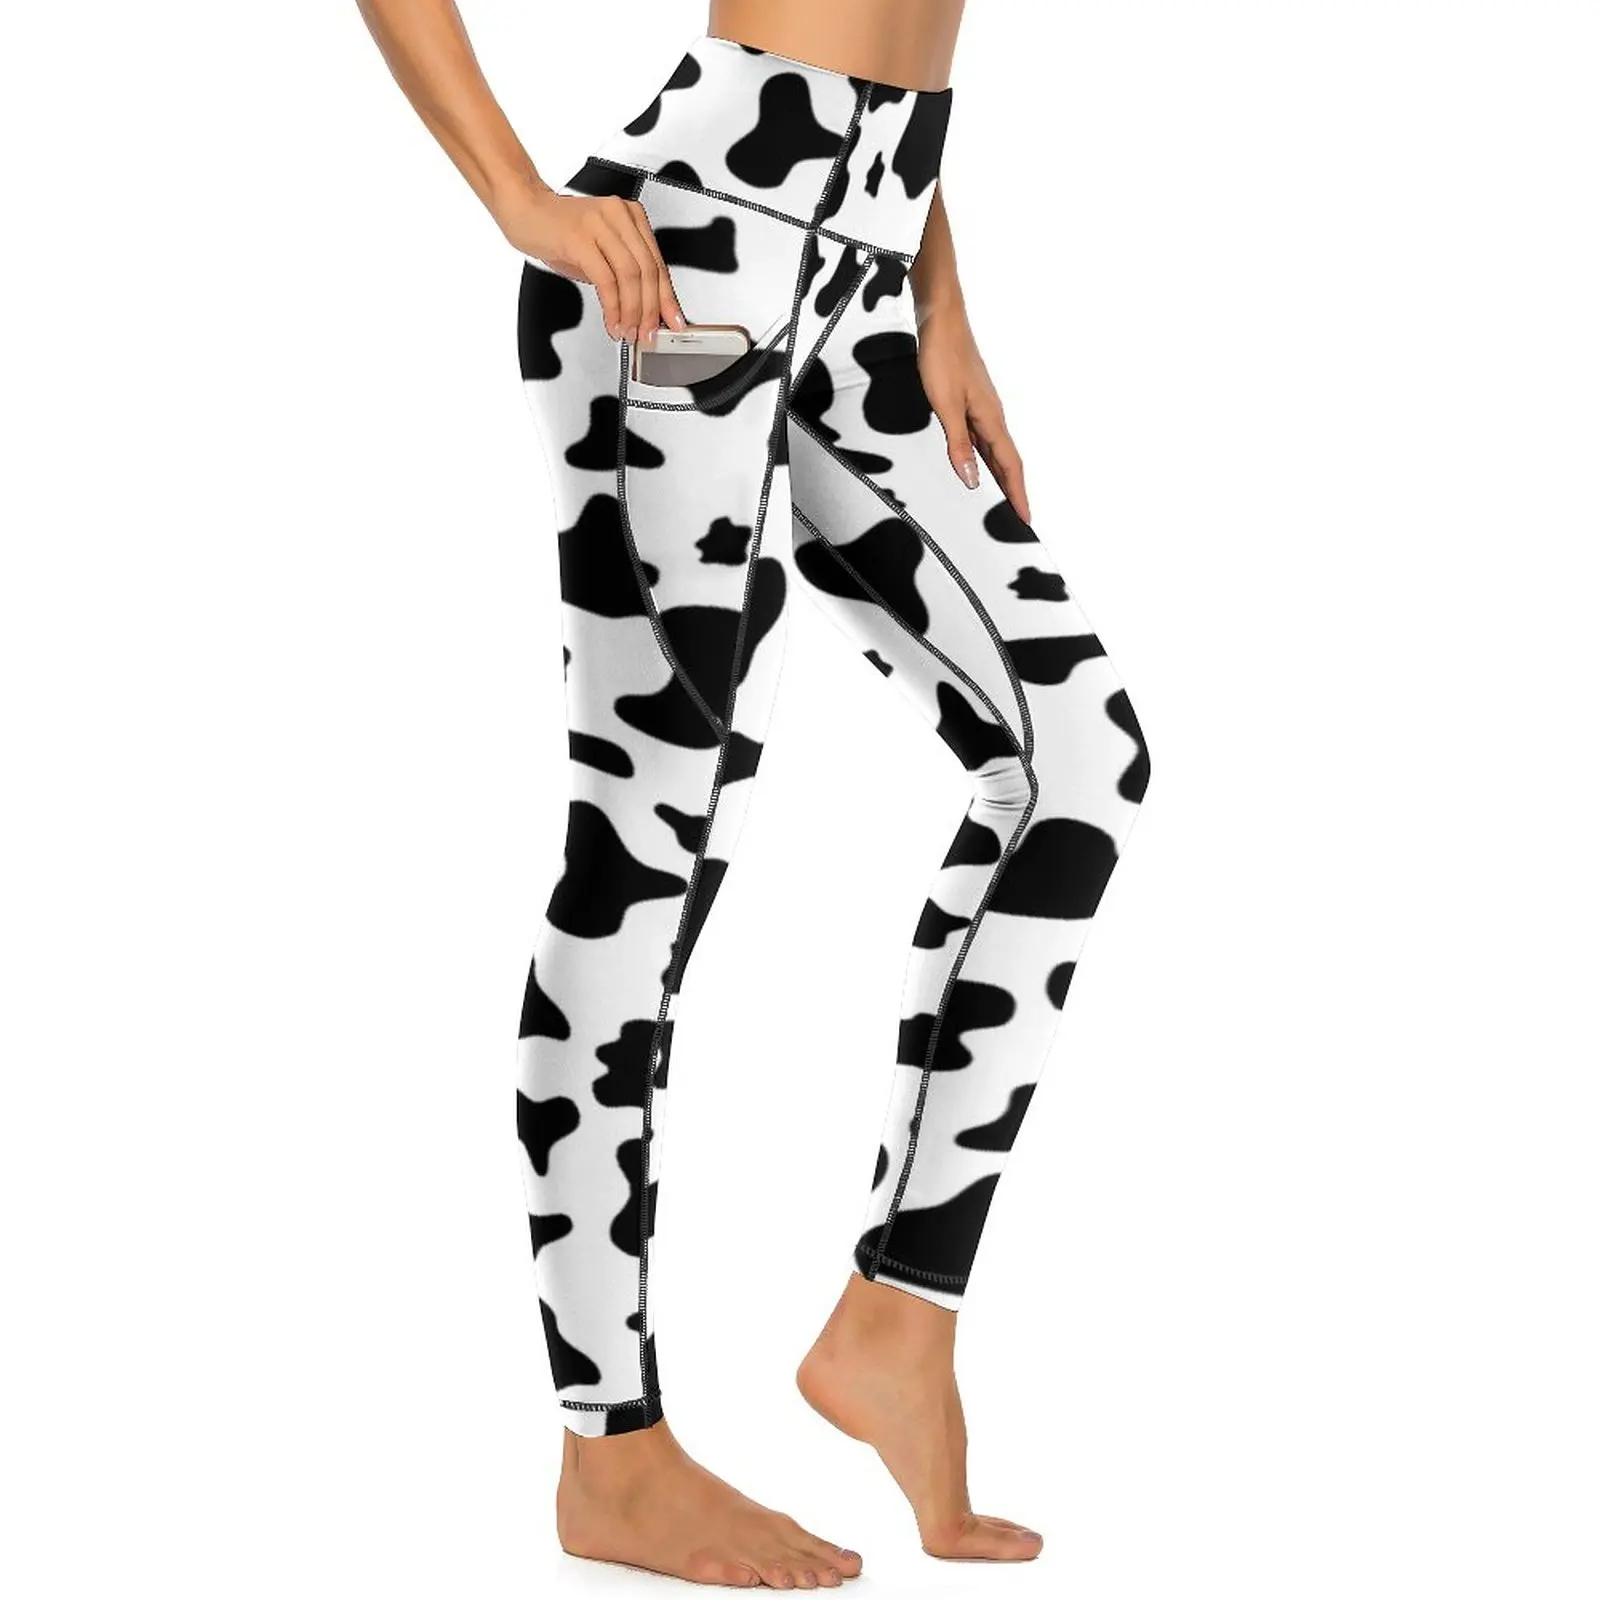 

Funny Farm Yoga Pants Sexy Black White Cow Print Printed Leggings Push Up Fitness Leggins Women Retro Stretch Sports Tights